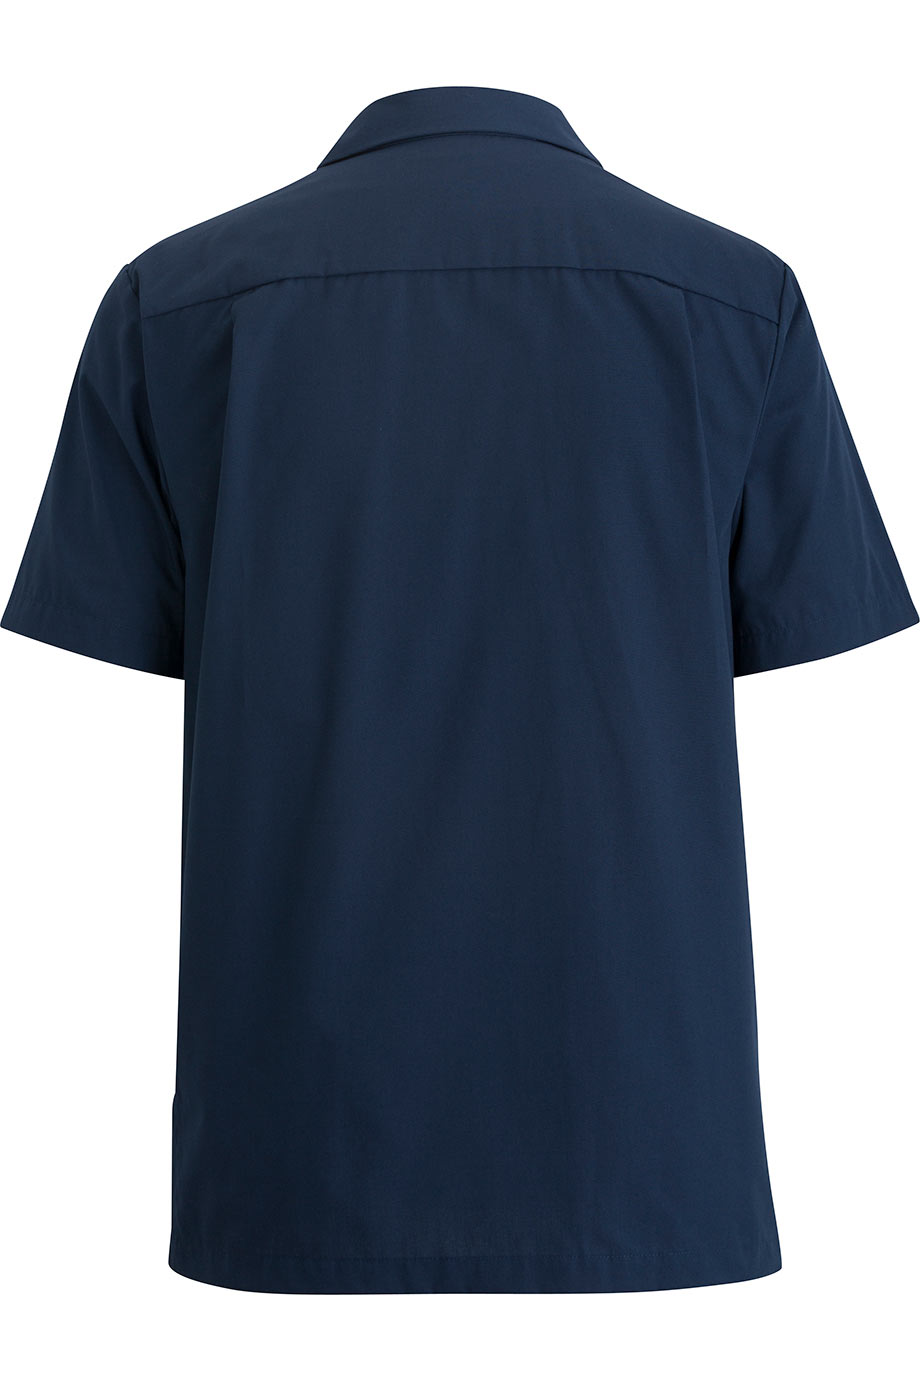 Essential Zip-Front Service Shirt | Edwards Garment